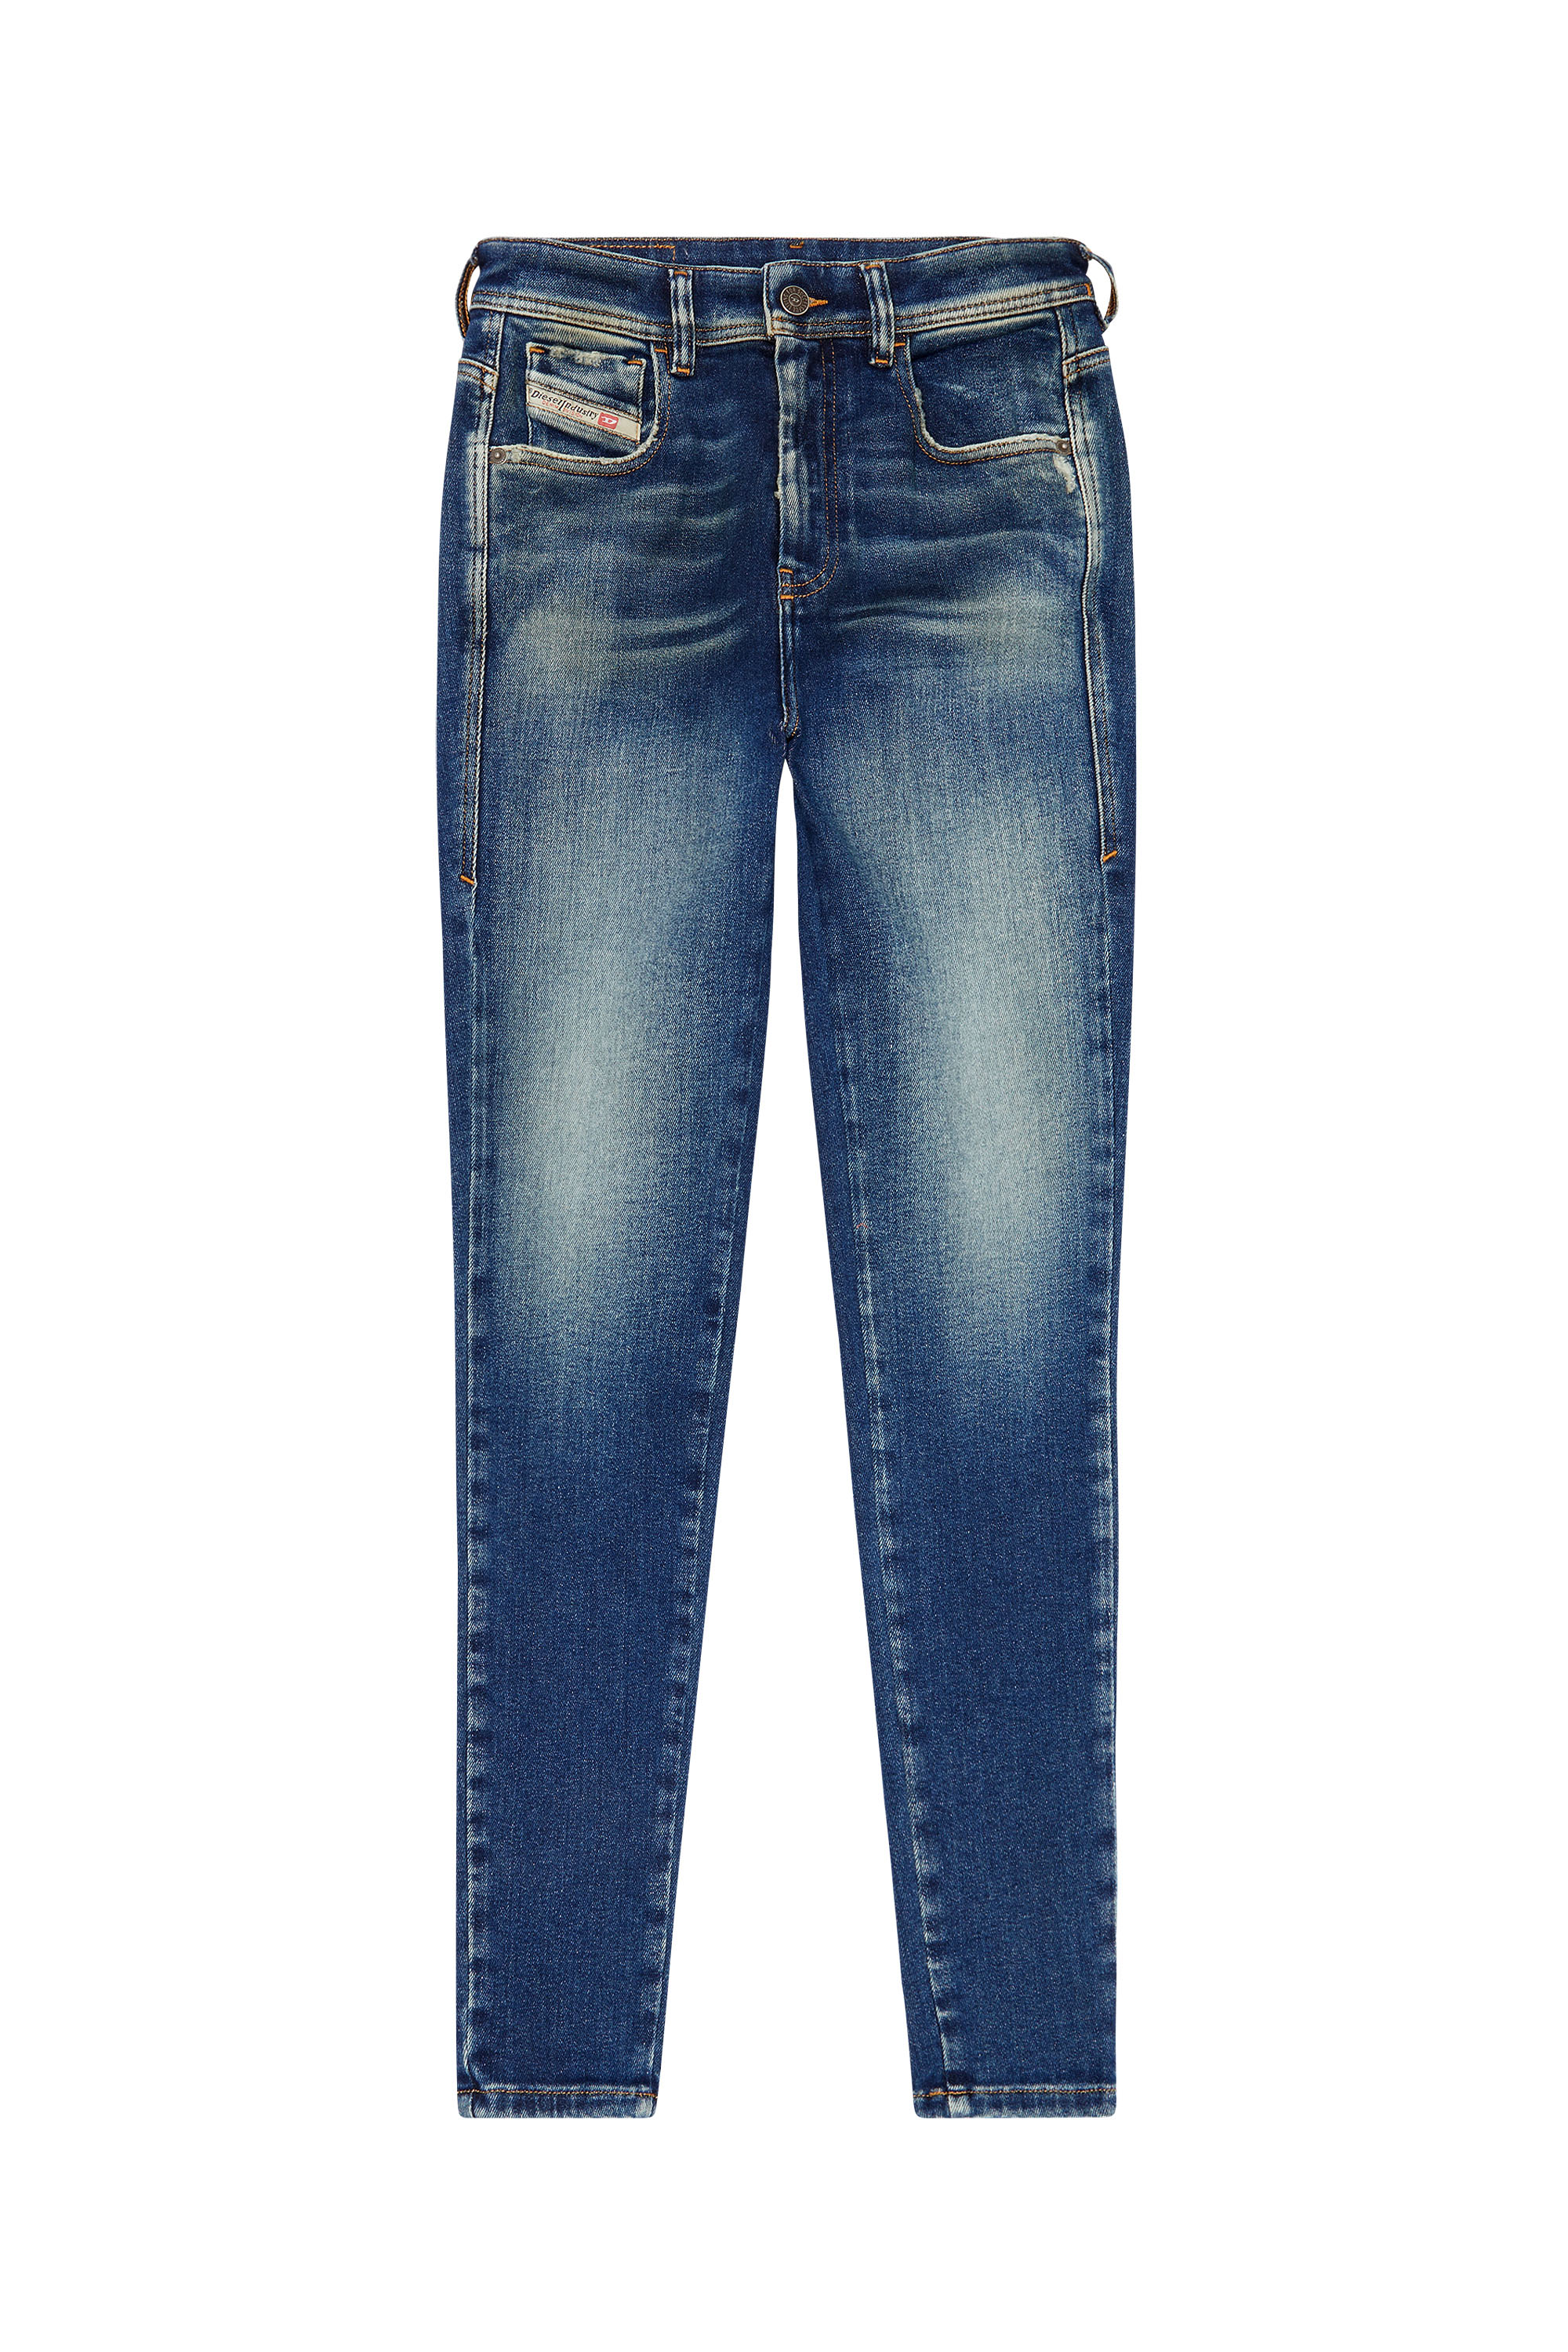 Women's Super skinny Jeans | Dark blue | Diesel 1984 Slandy-High